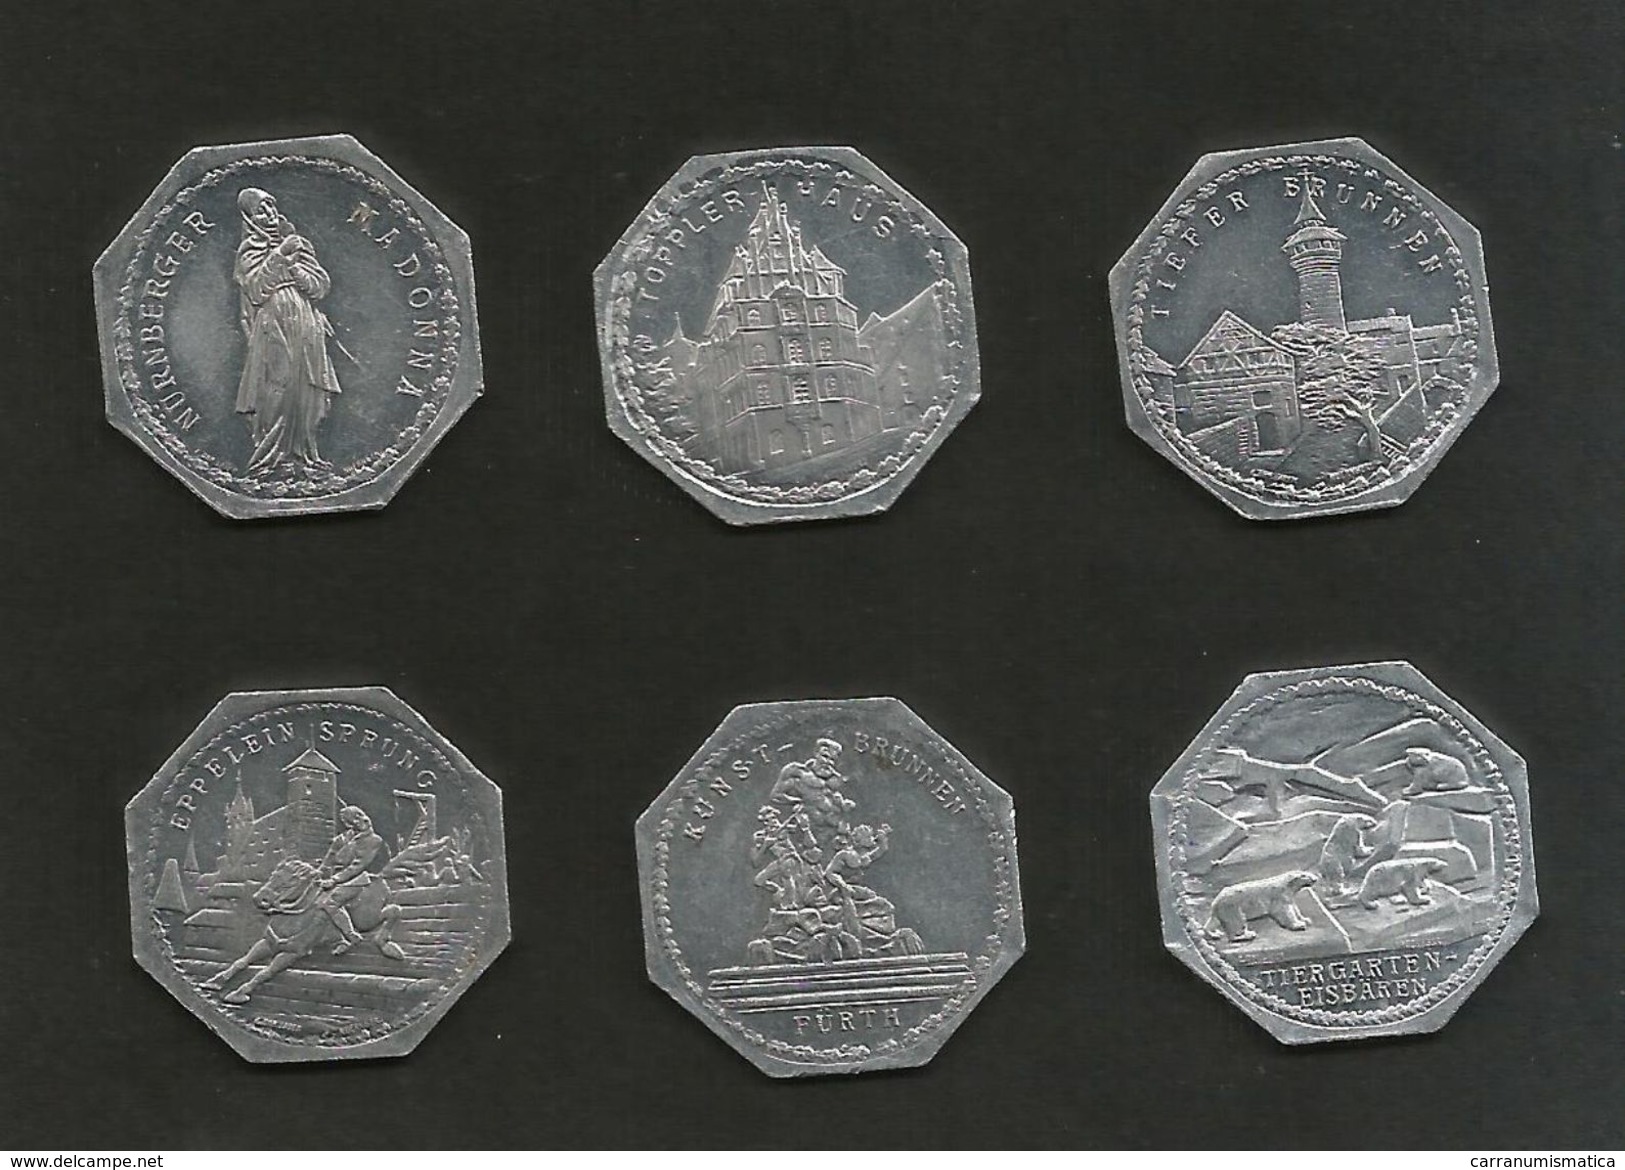 DEUTSCHLAND / GERMANY - NURNBERG STRASSENBAHN - 20 Pfennig (Monuments) - Lot Of 6 Tokens - Monedas/ De Necesidad